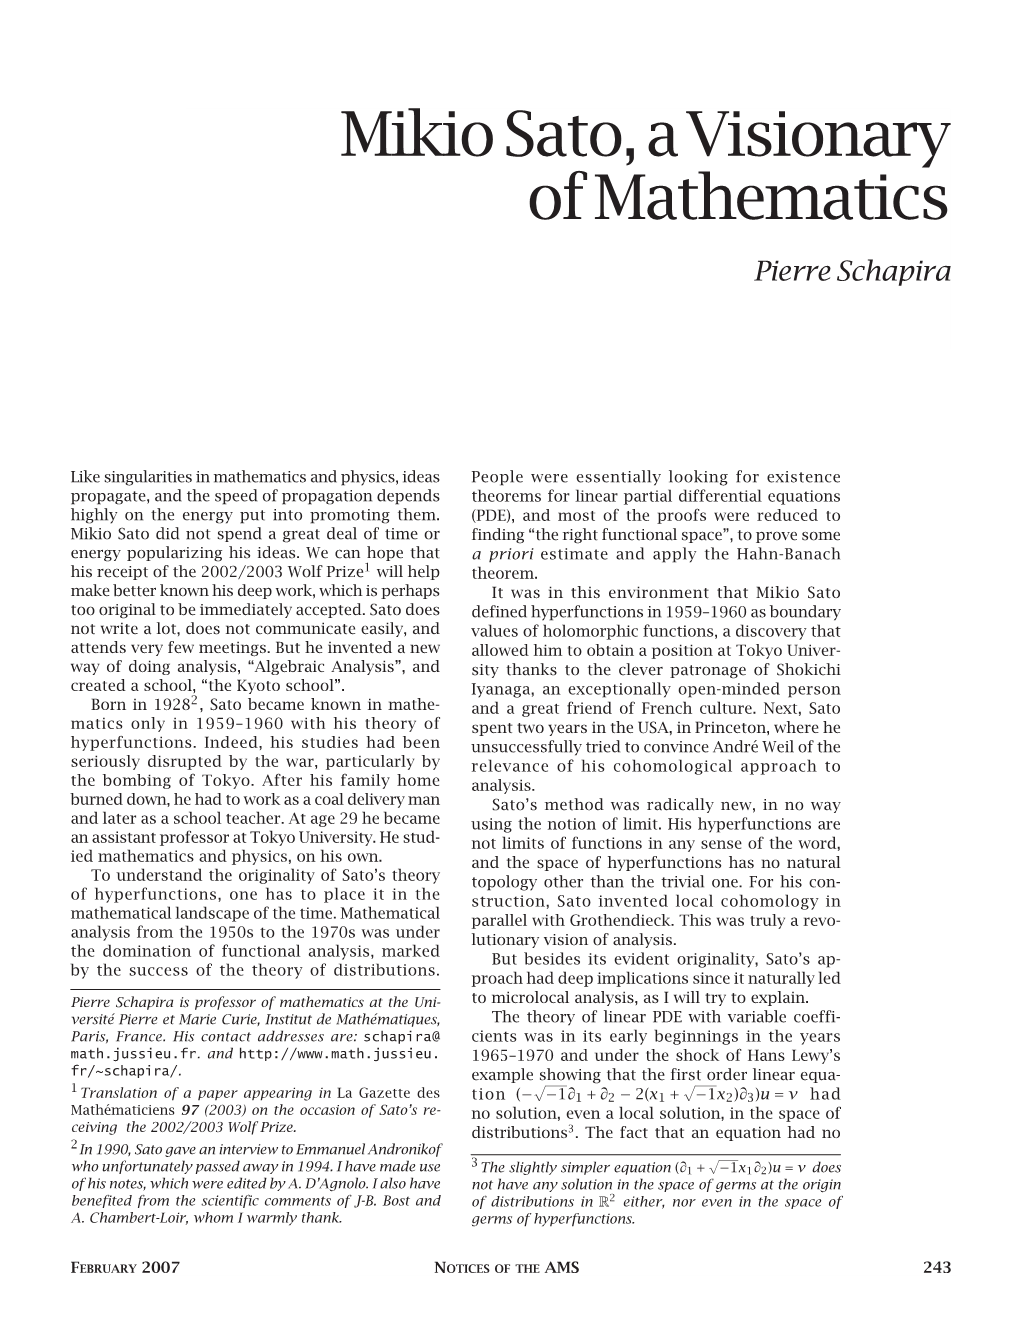 Mikio Sato, a Visionary of Mathematics, Volume 54, Number 2